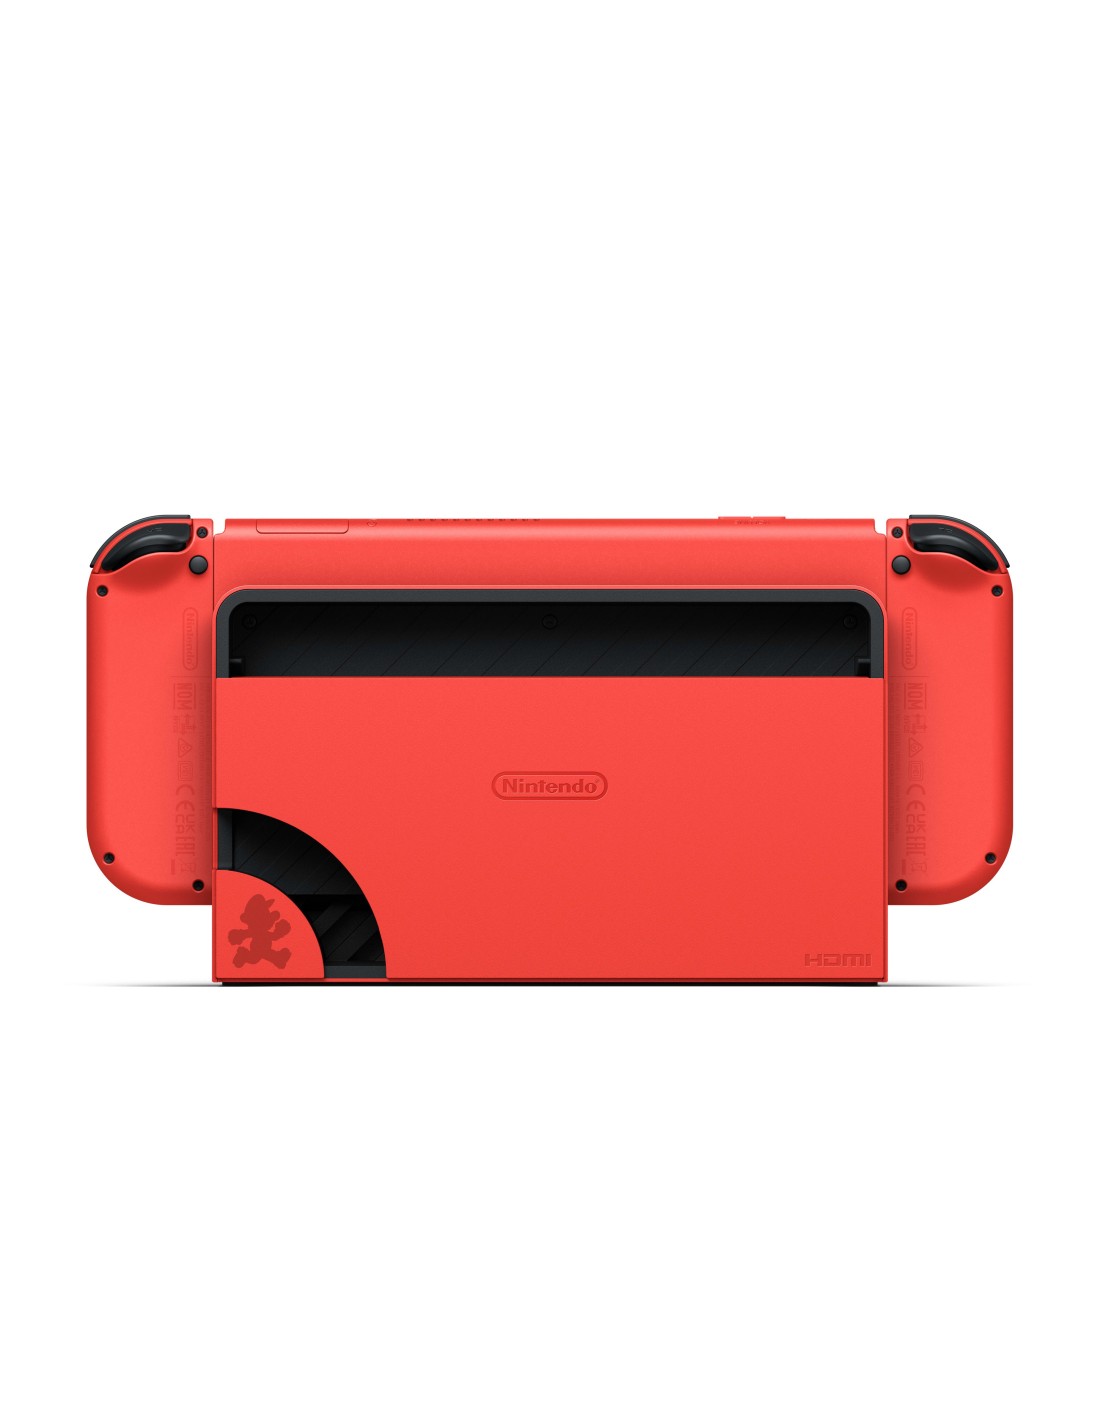 Nintendo Switch - OLED Model - Mario Red Edition videoconsola